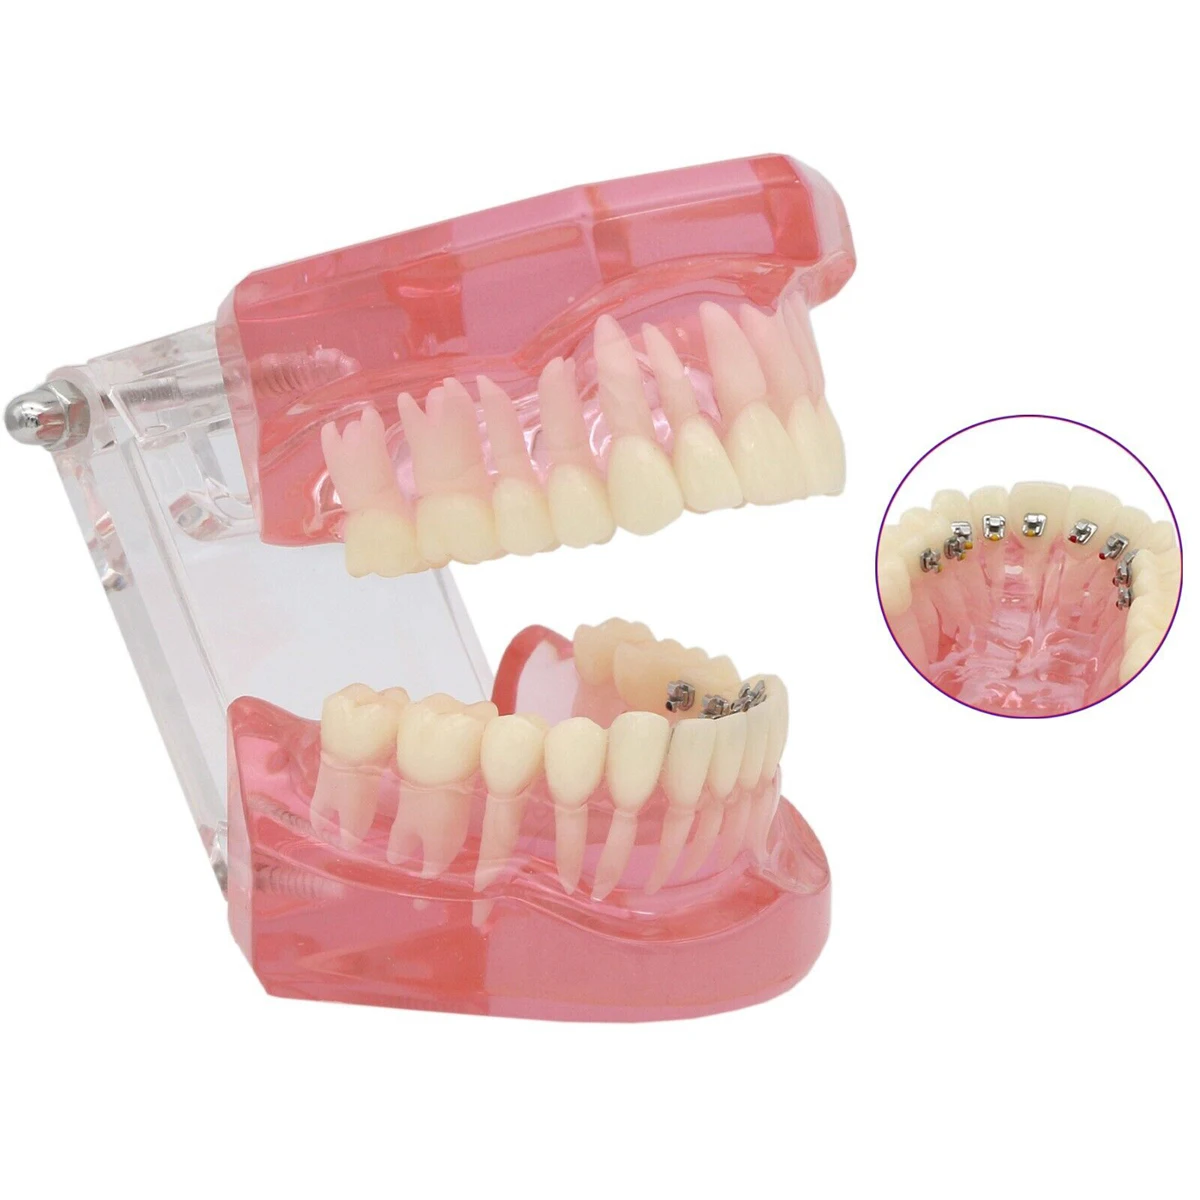 

Dental Orthodontic Teeth Model With Lingual Braces Tube Acrylic Pink Dental Classroom Teaching Display Teeth Model